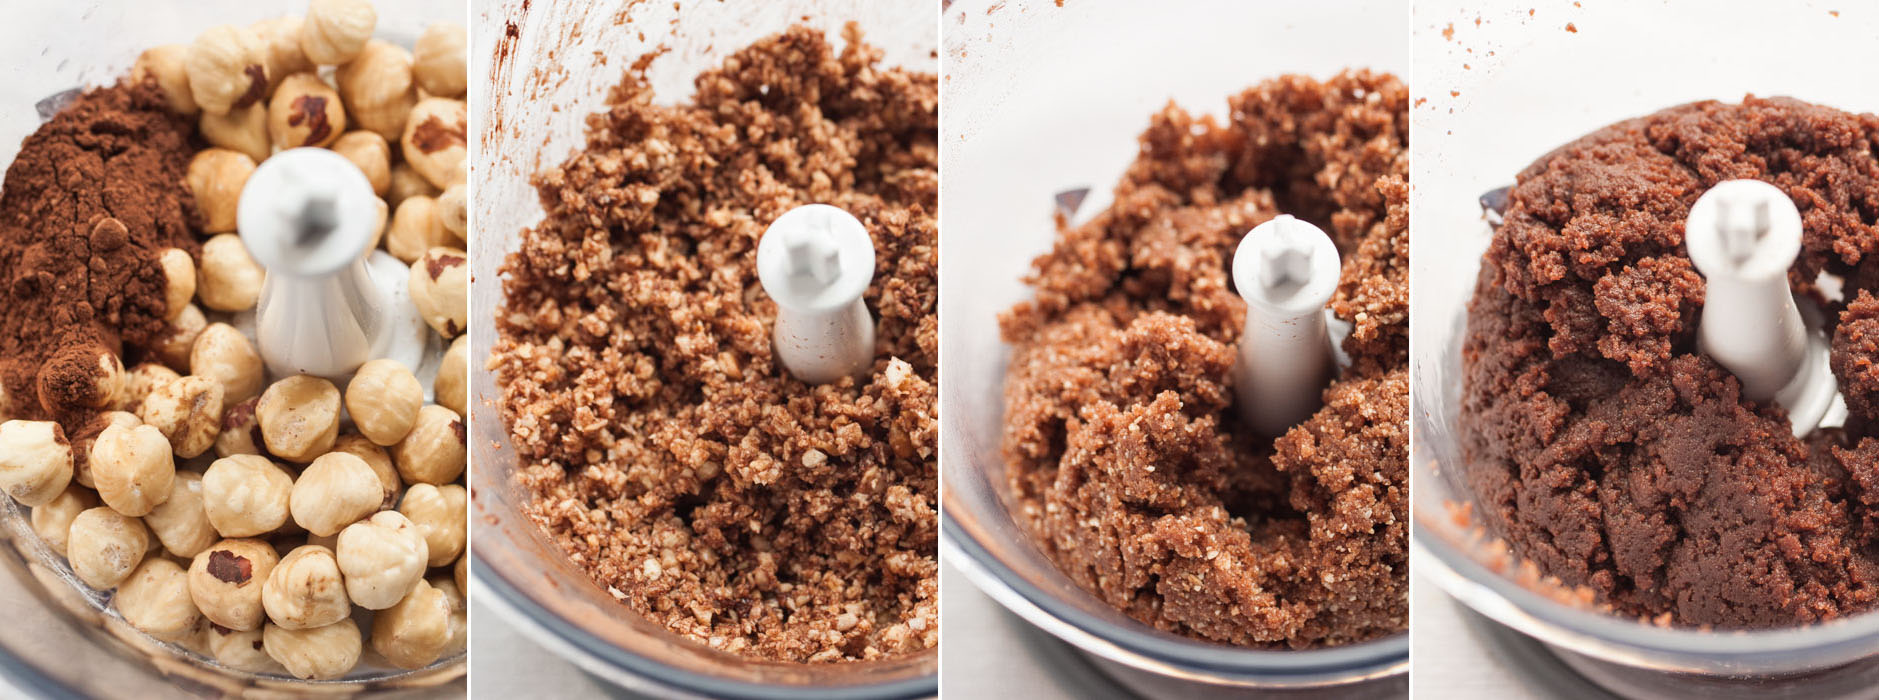 Chestnut flour crêpes + hazelnut cacao spread {vegan} - Marta's Plants